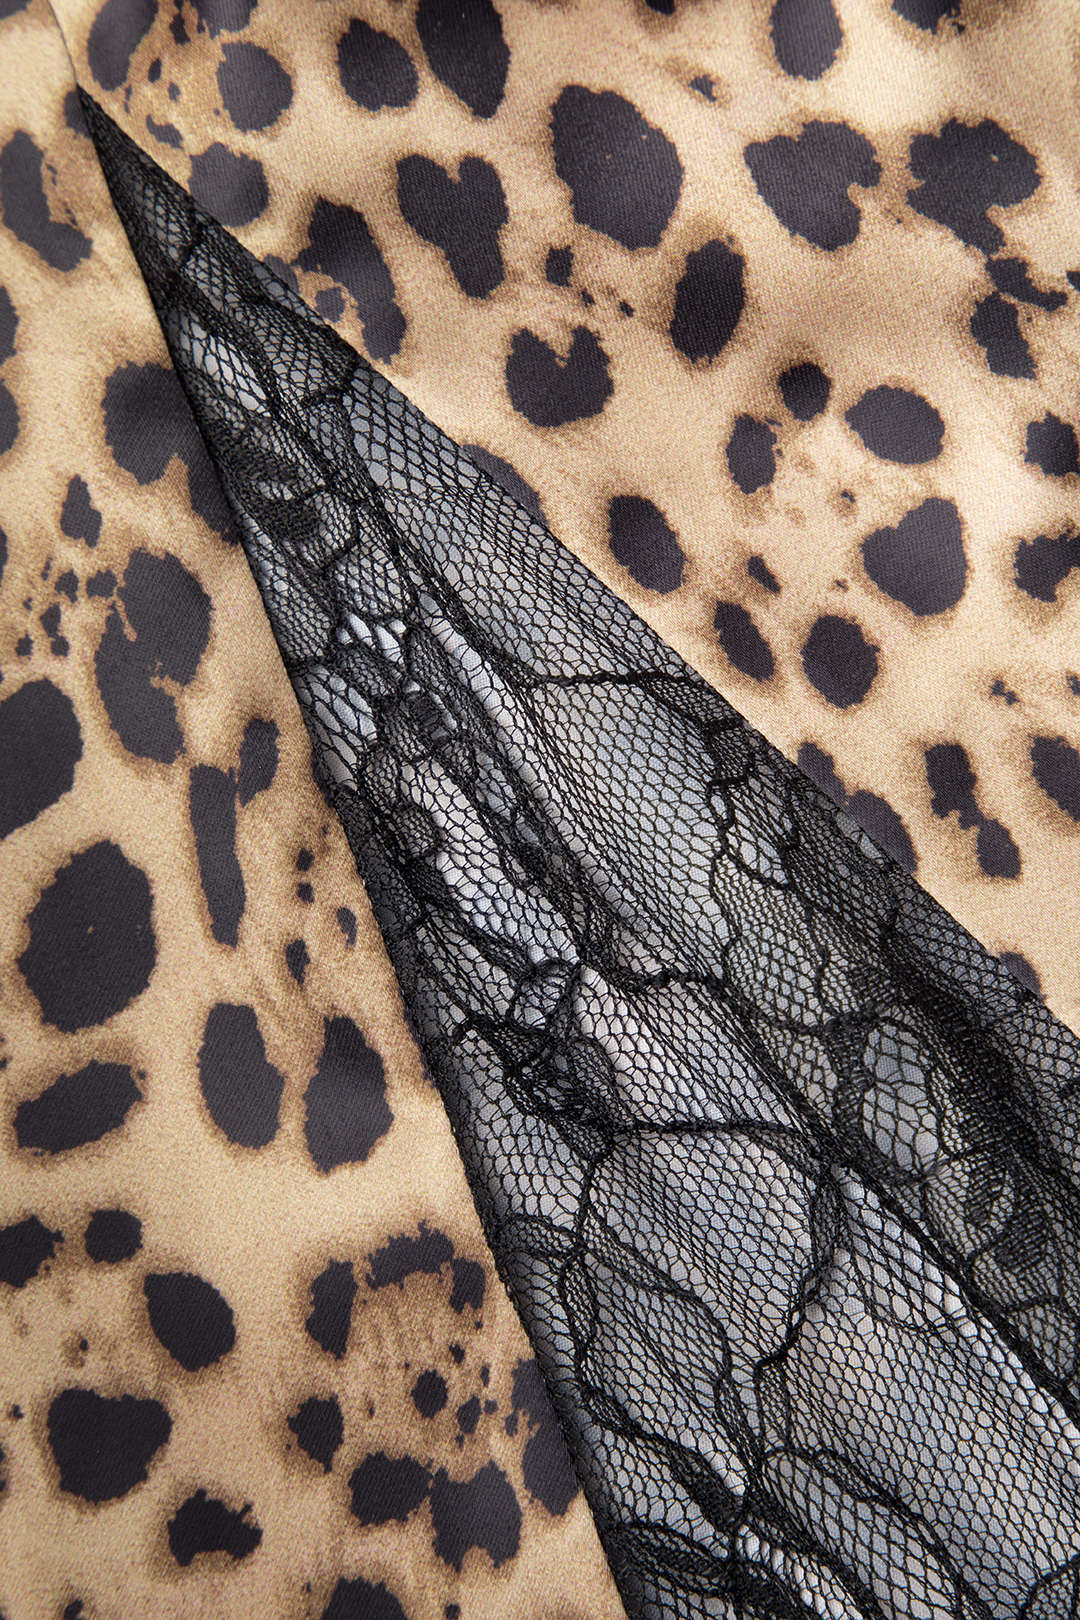 Leopard Print Lace Detail Maxi Skirt